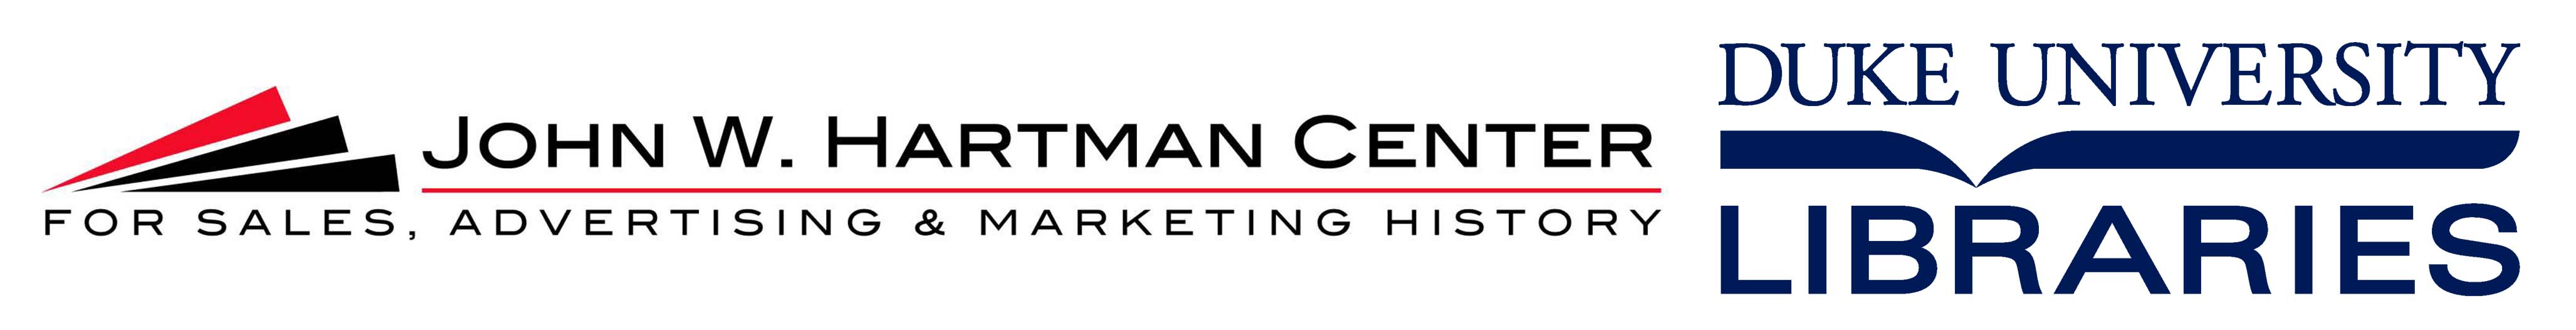 John W. Hartman Center for Sales, Advertising & Marketing History, Duke University